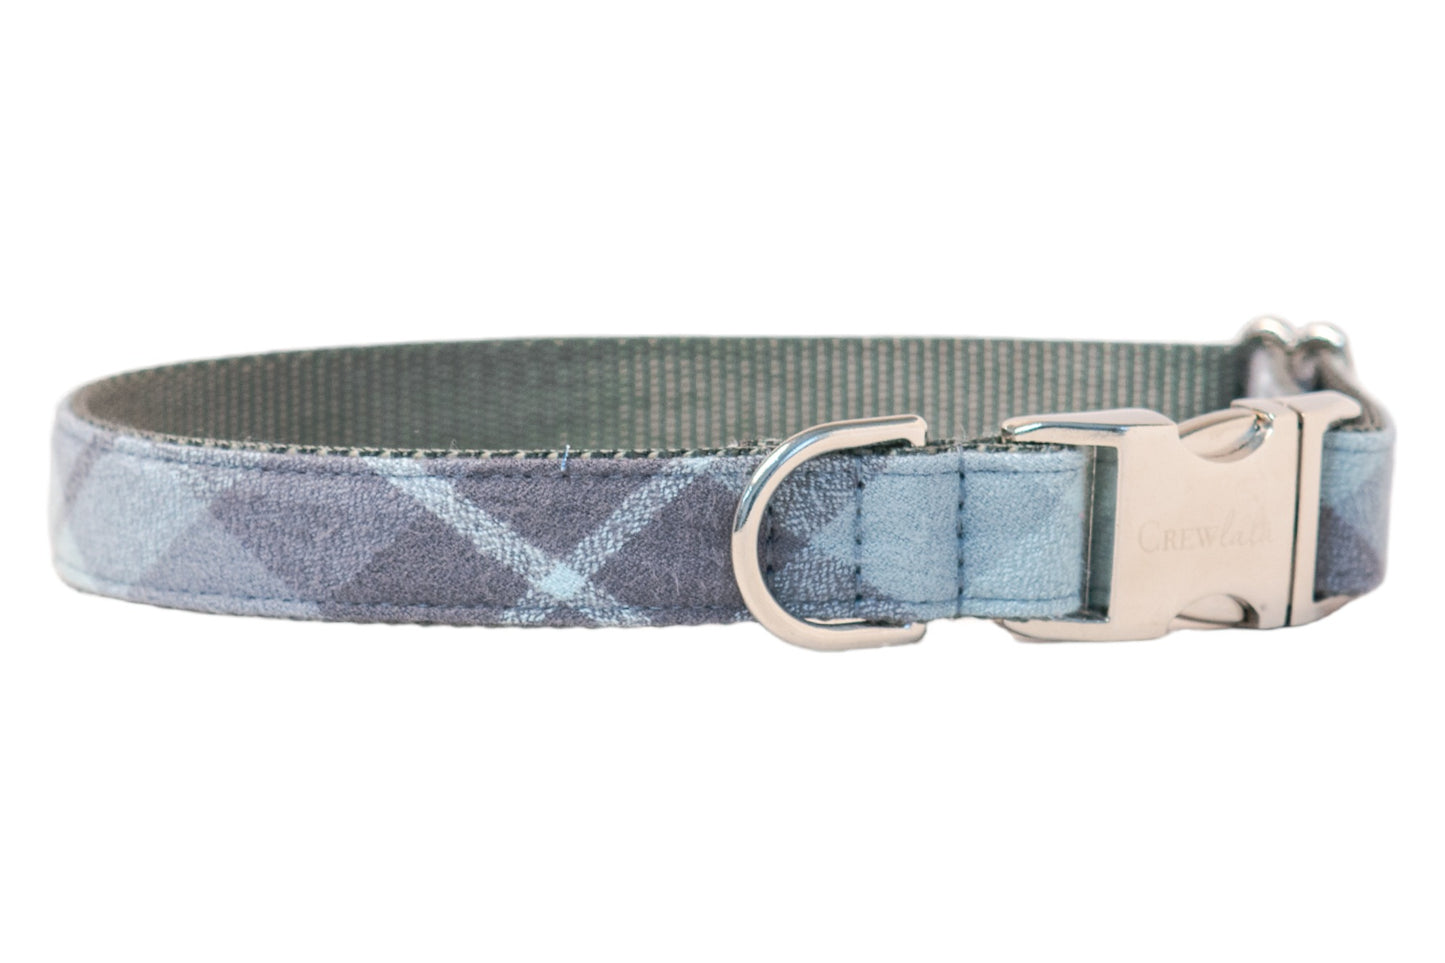 Grey's Flannel Bow Tie Dog Collar